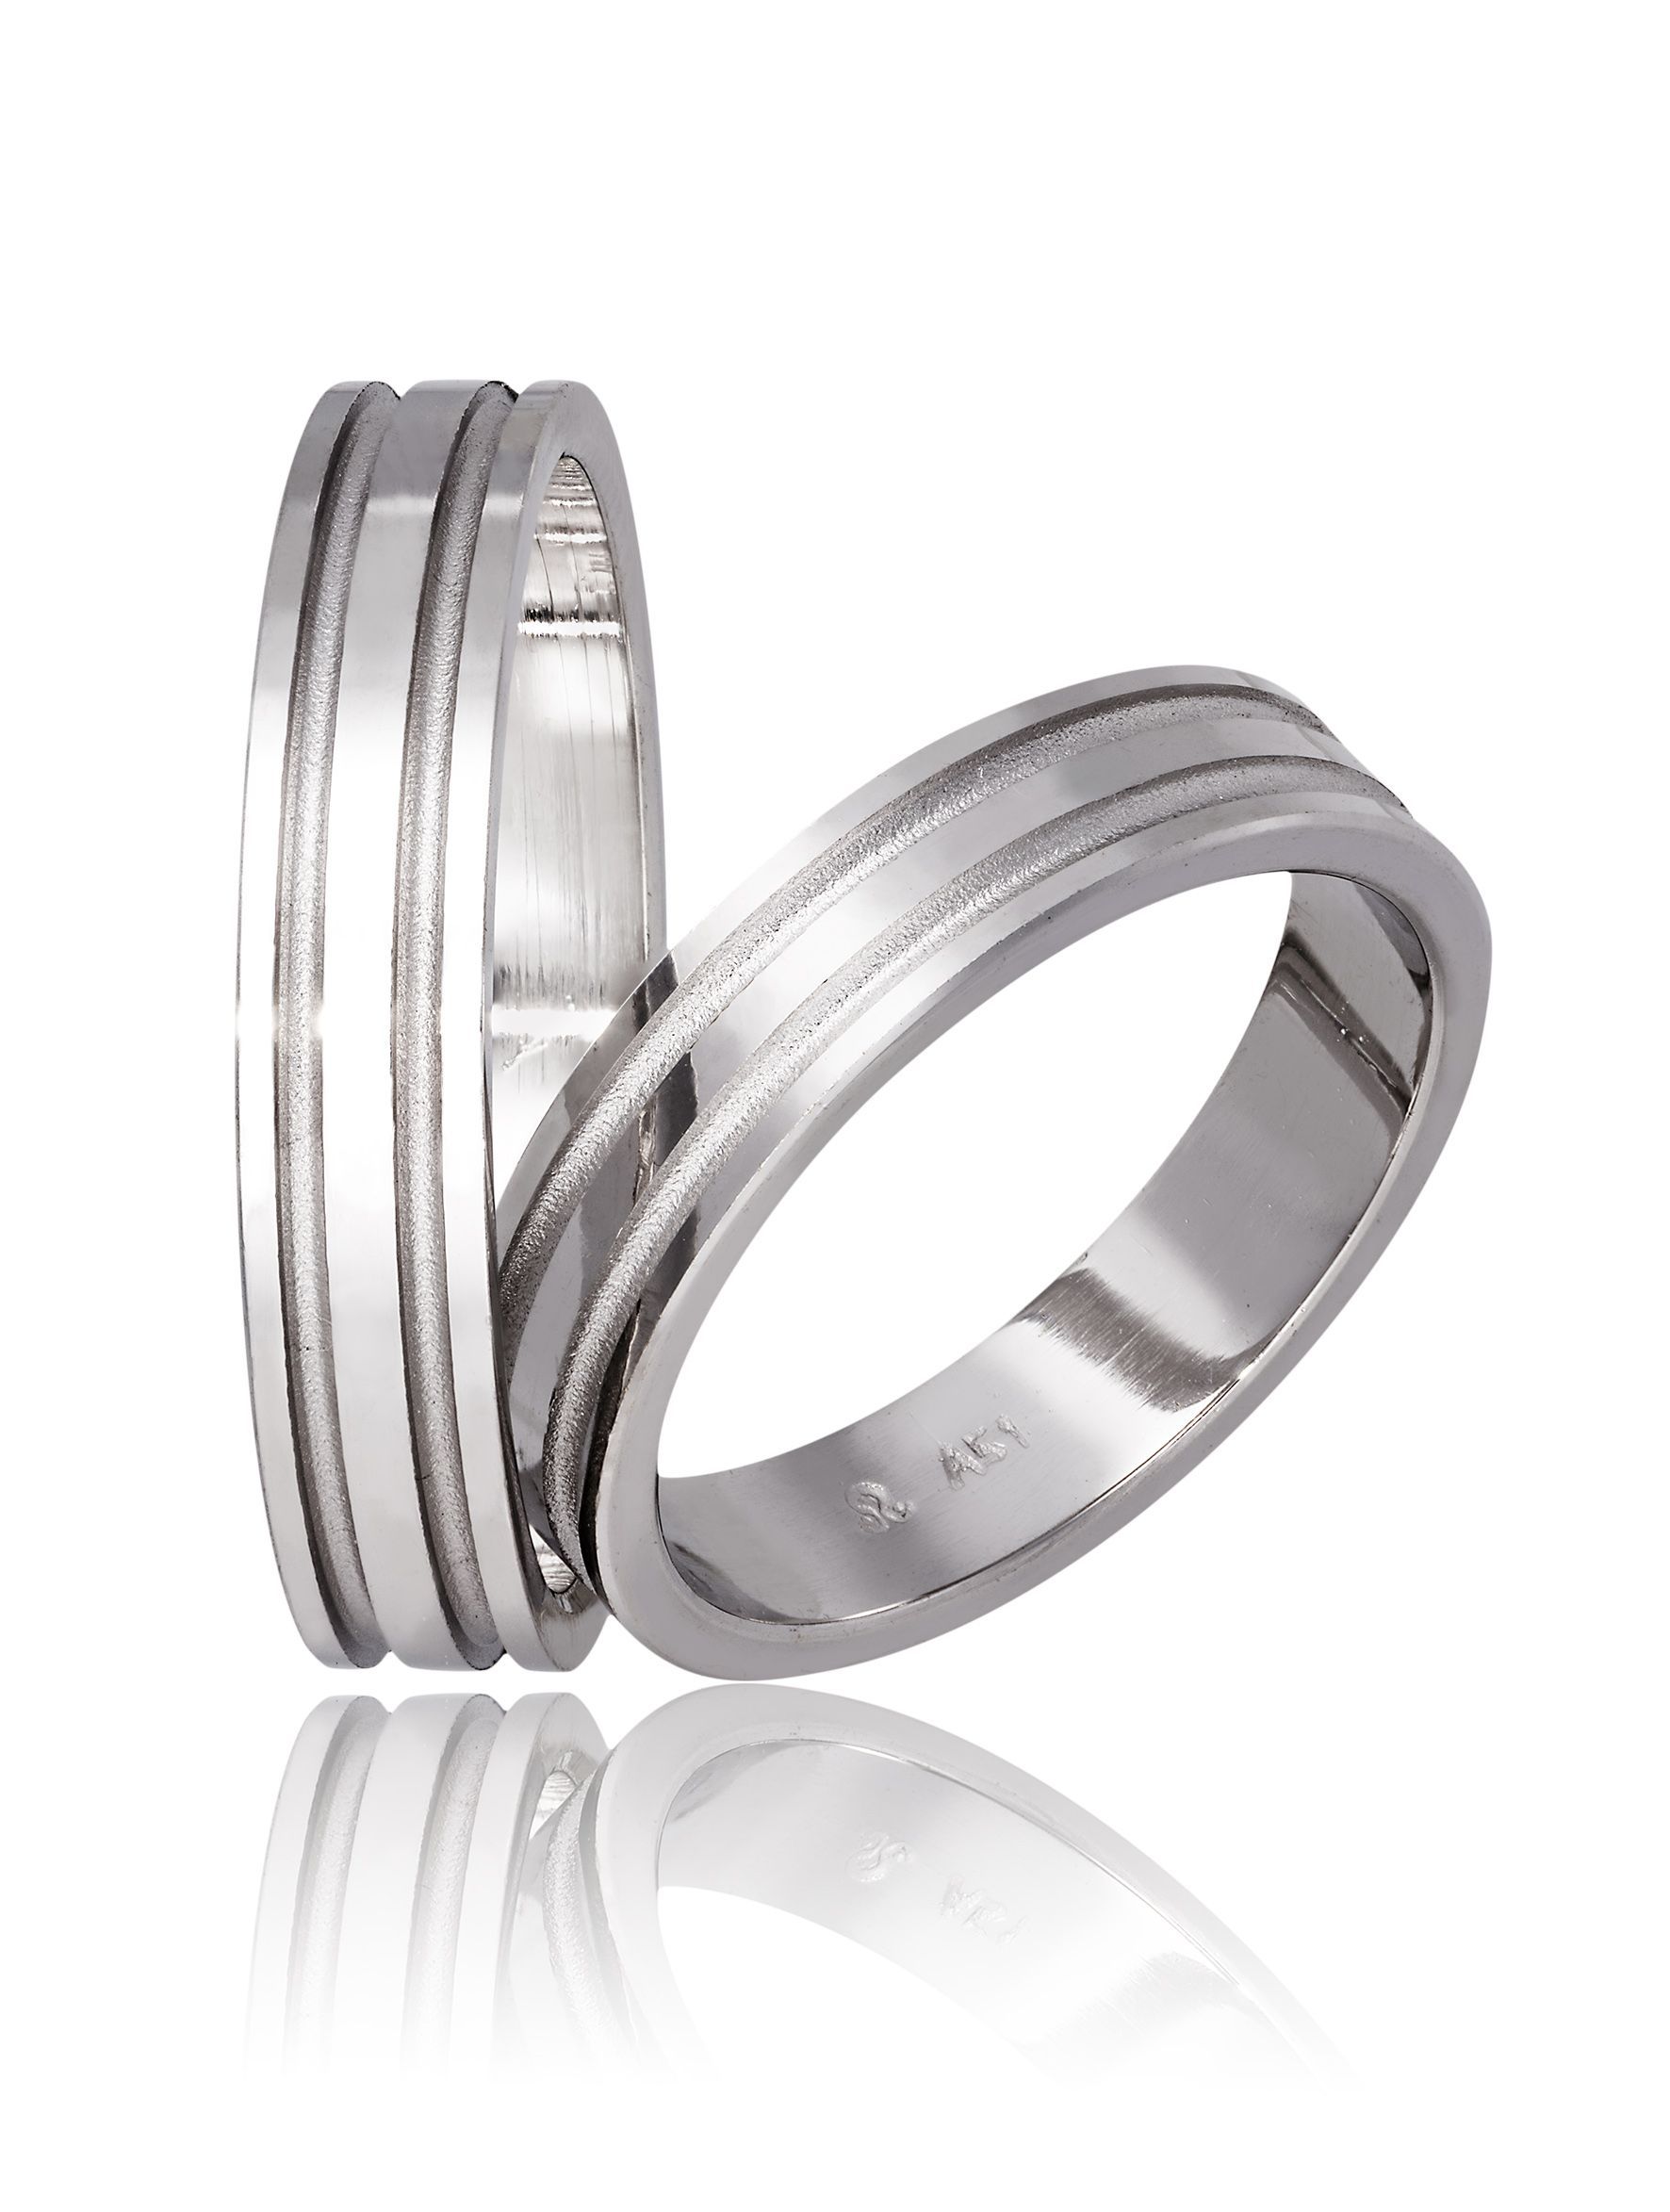 White gold wedding rings 4.5mm  (code 751)